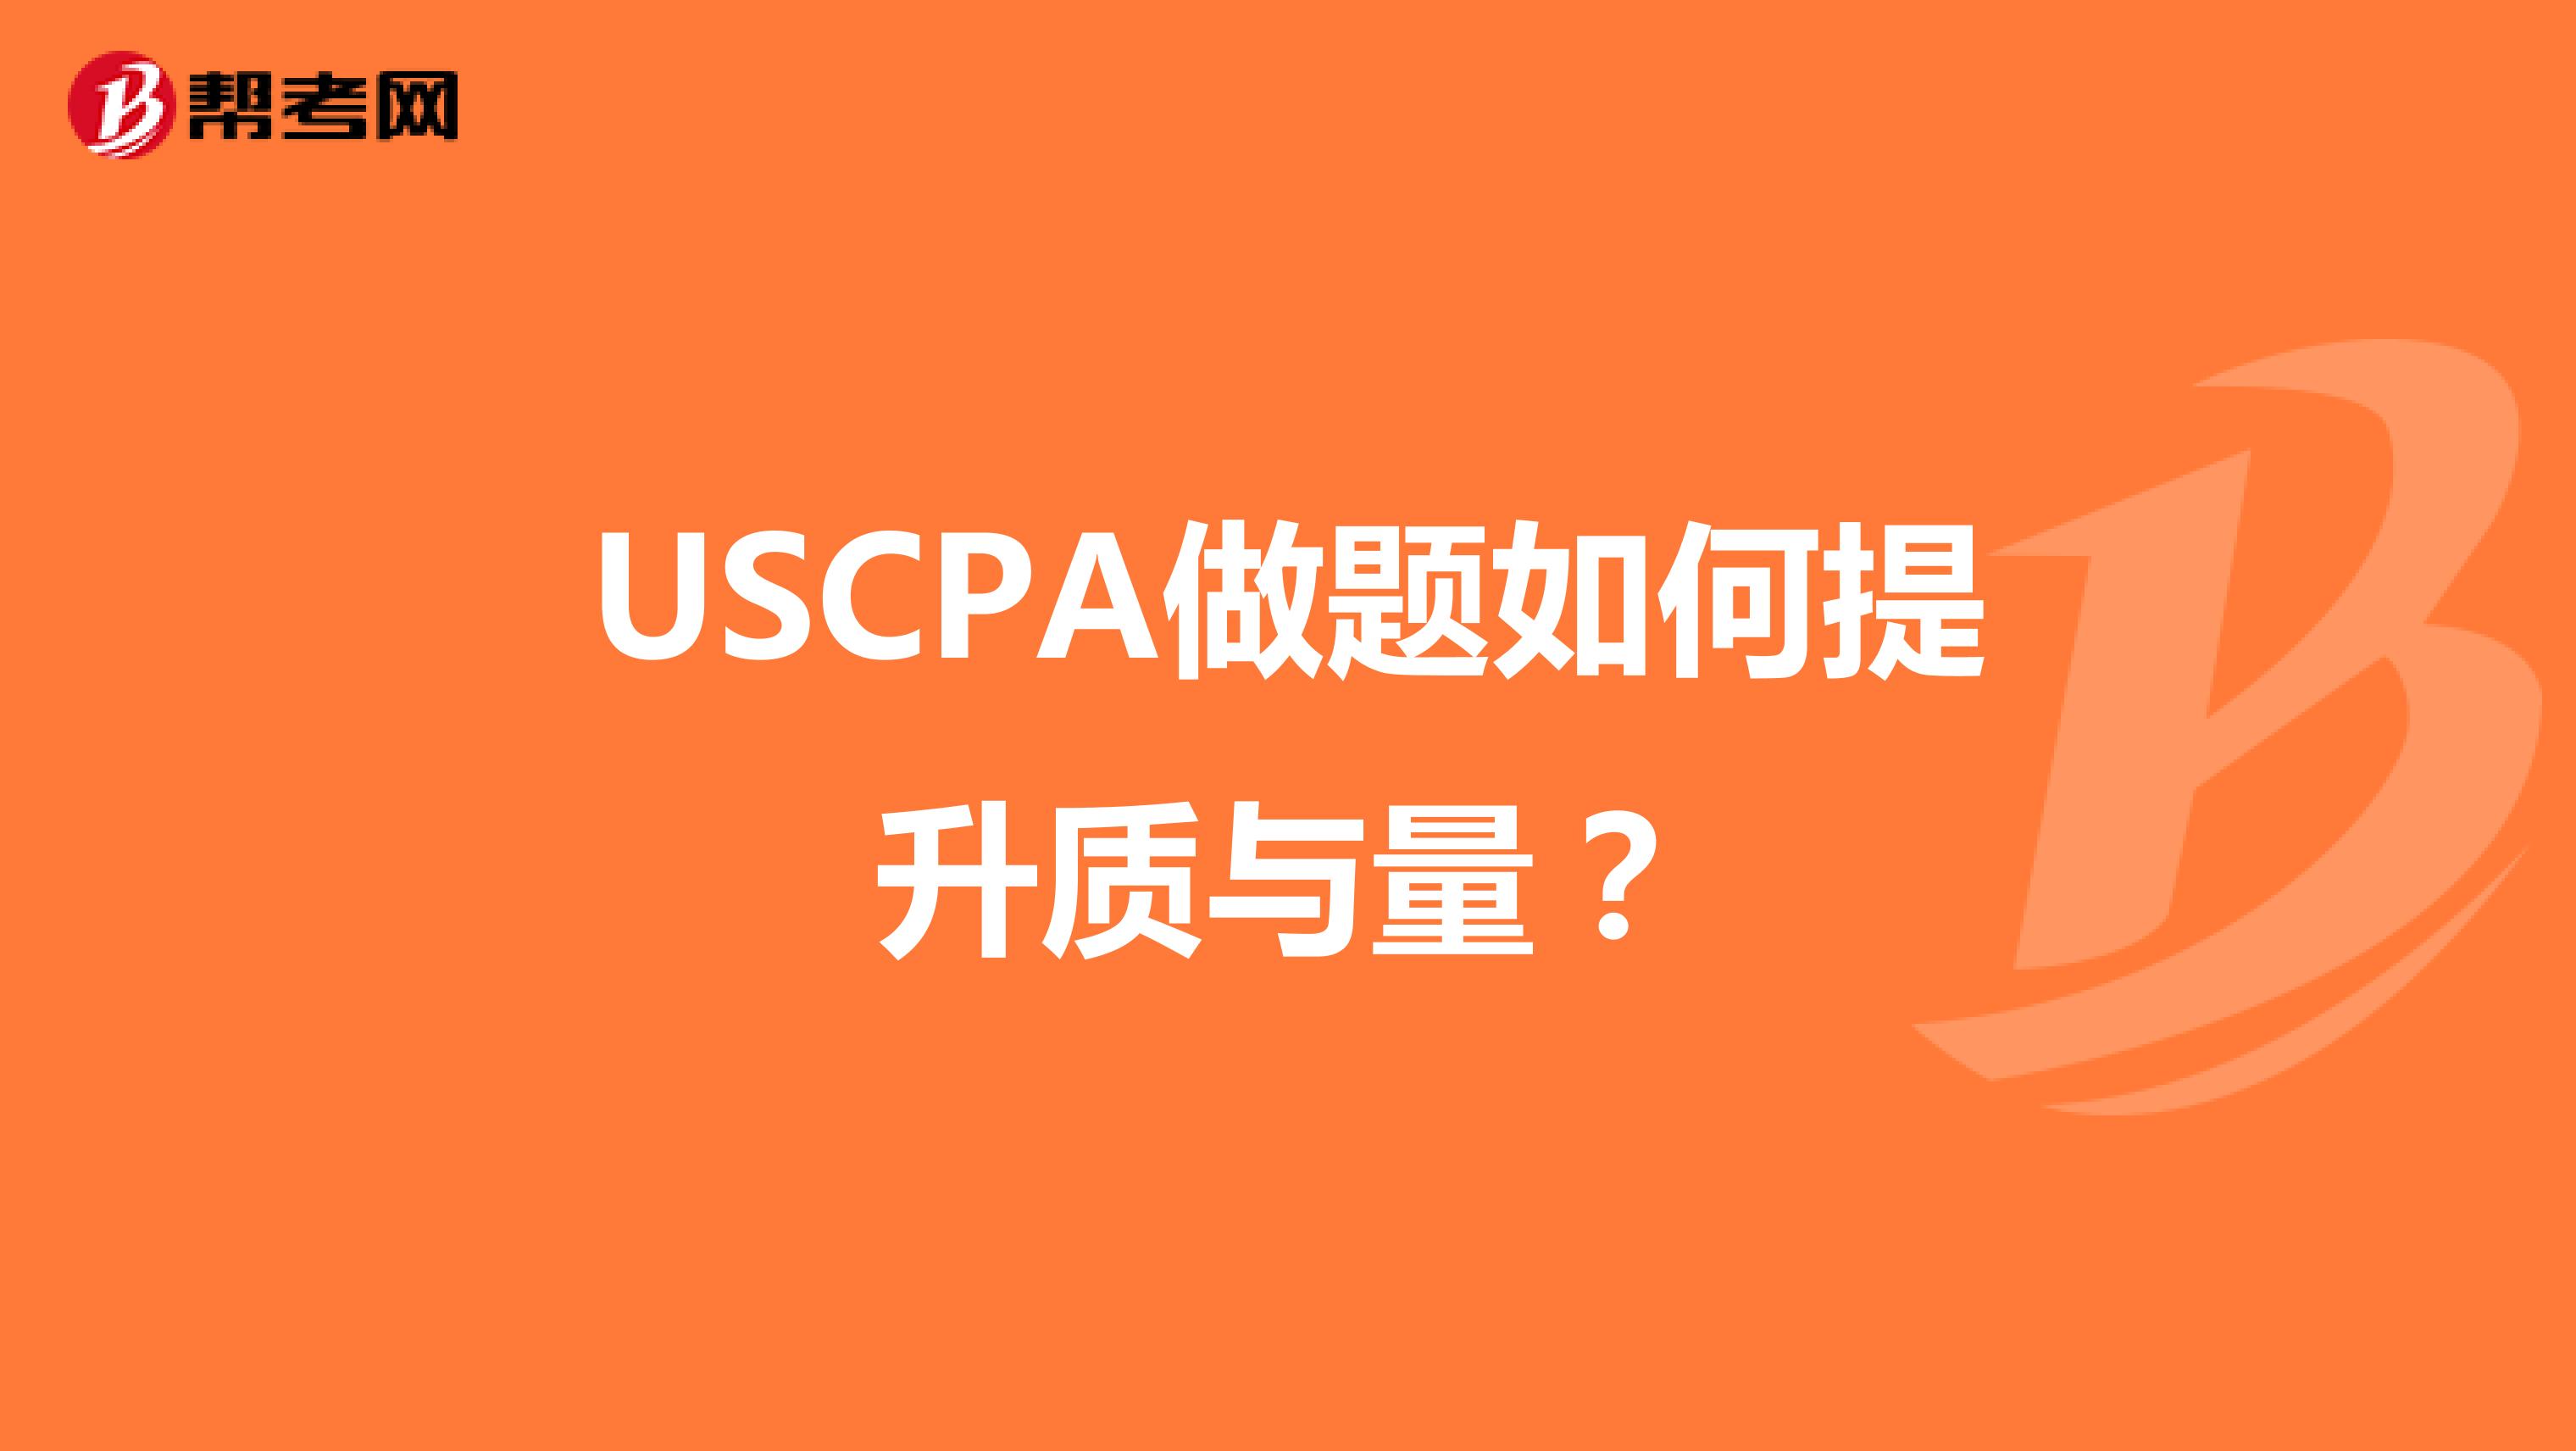 USCPA做题如何提升质与量？